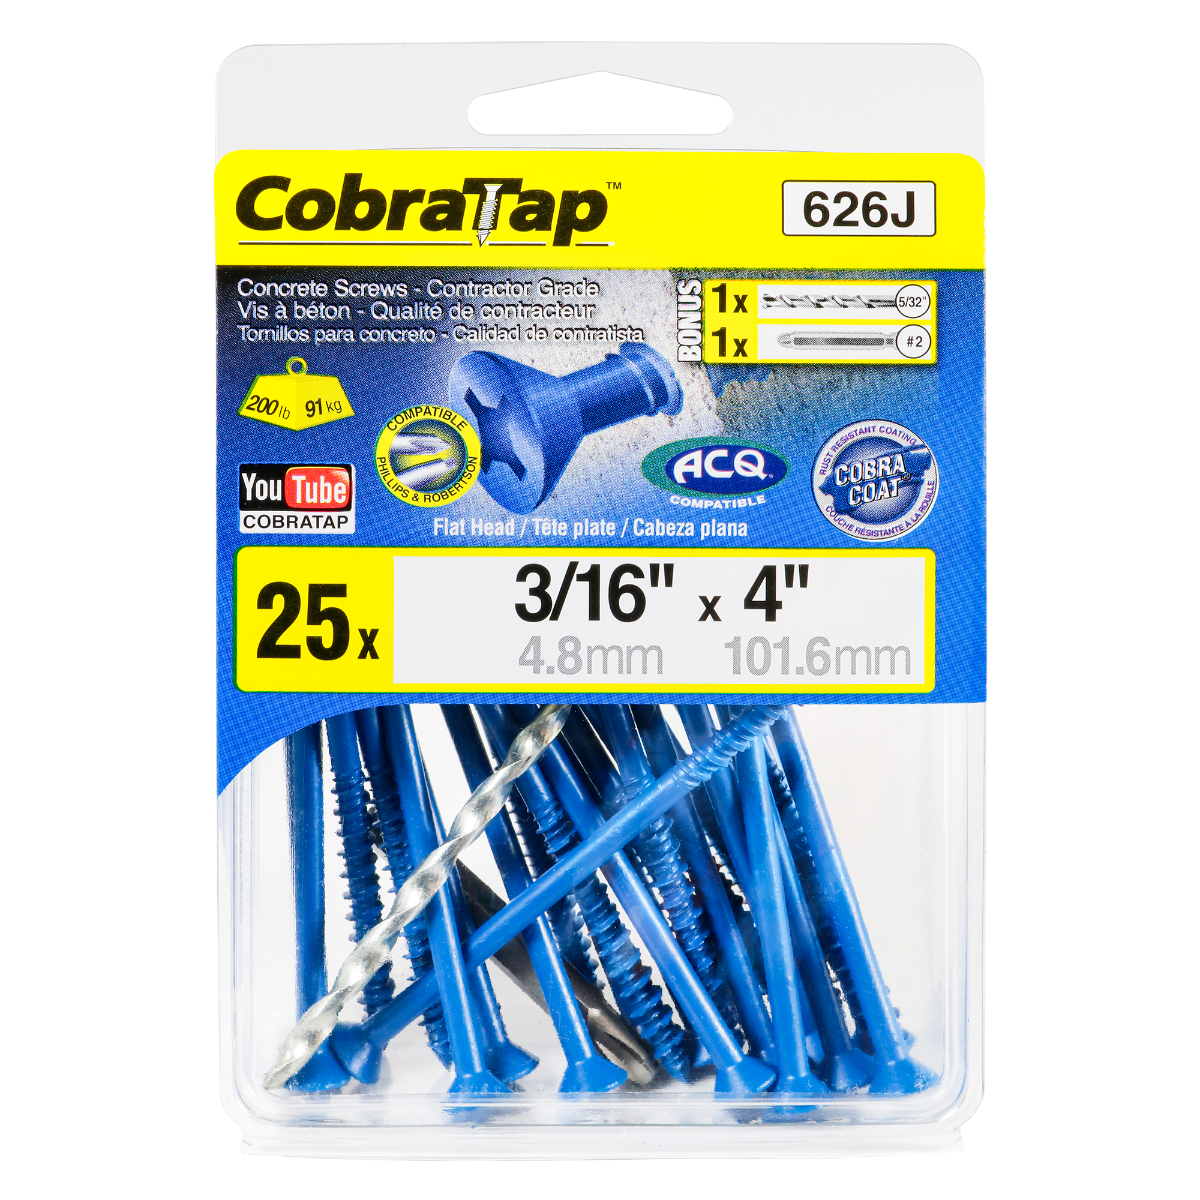 3/16"x4" Flat Head CobraTap Concrete Screws (25 Pack)